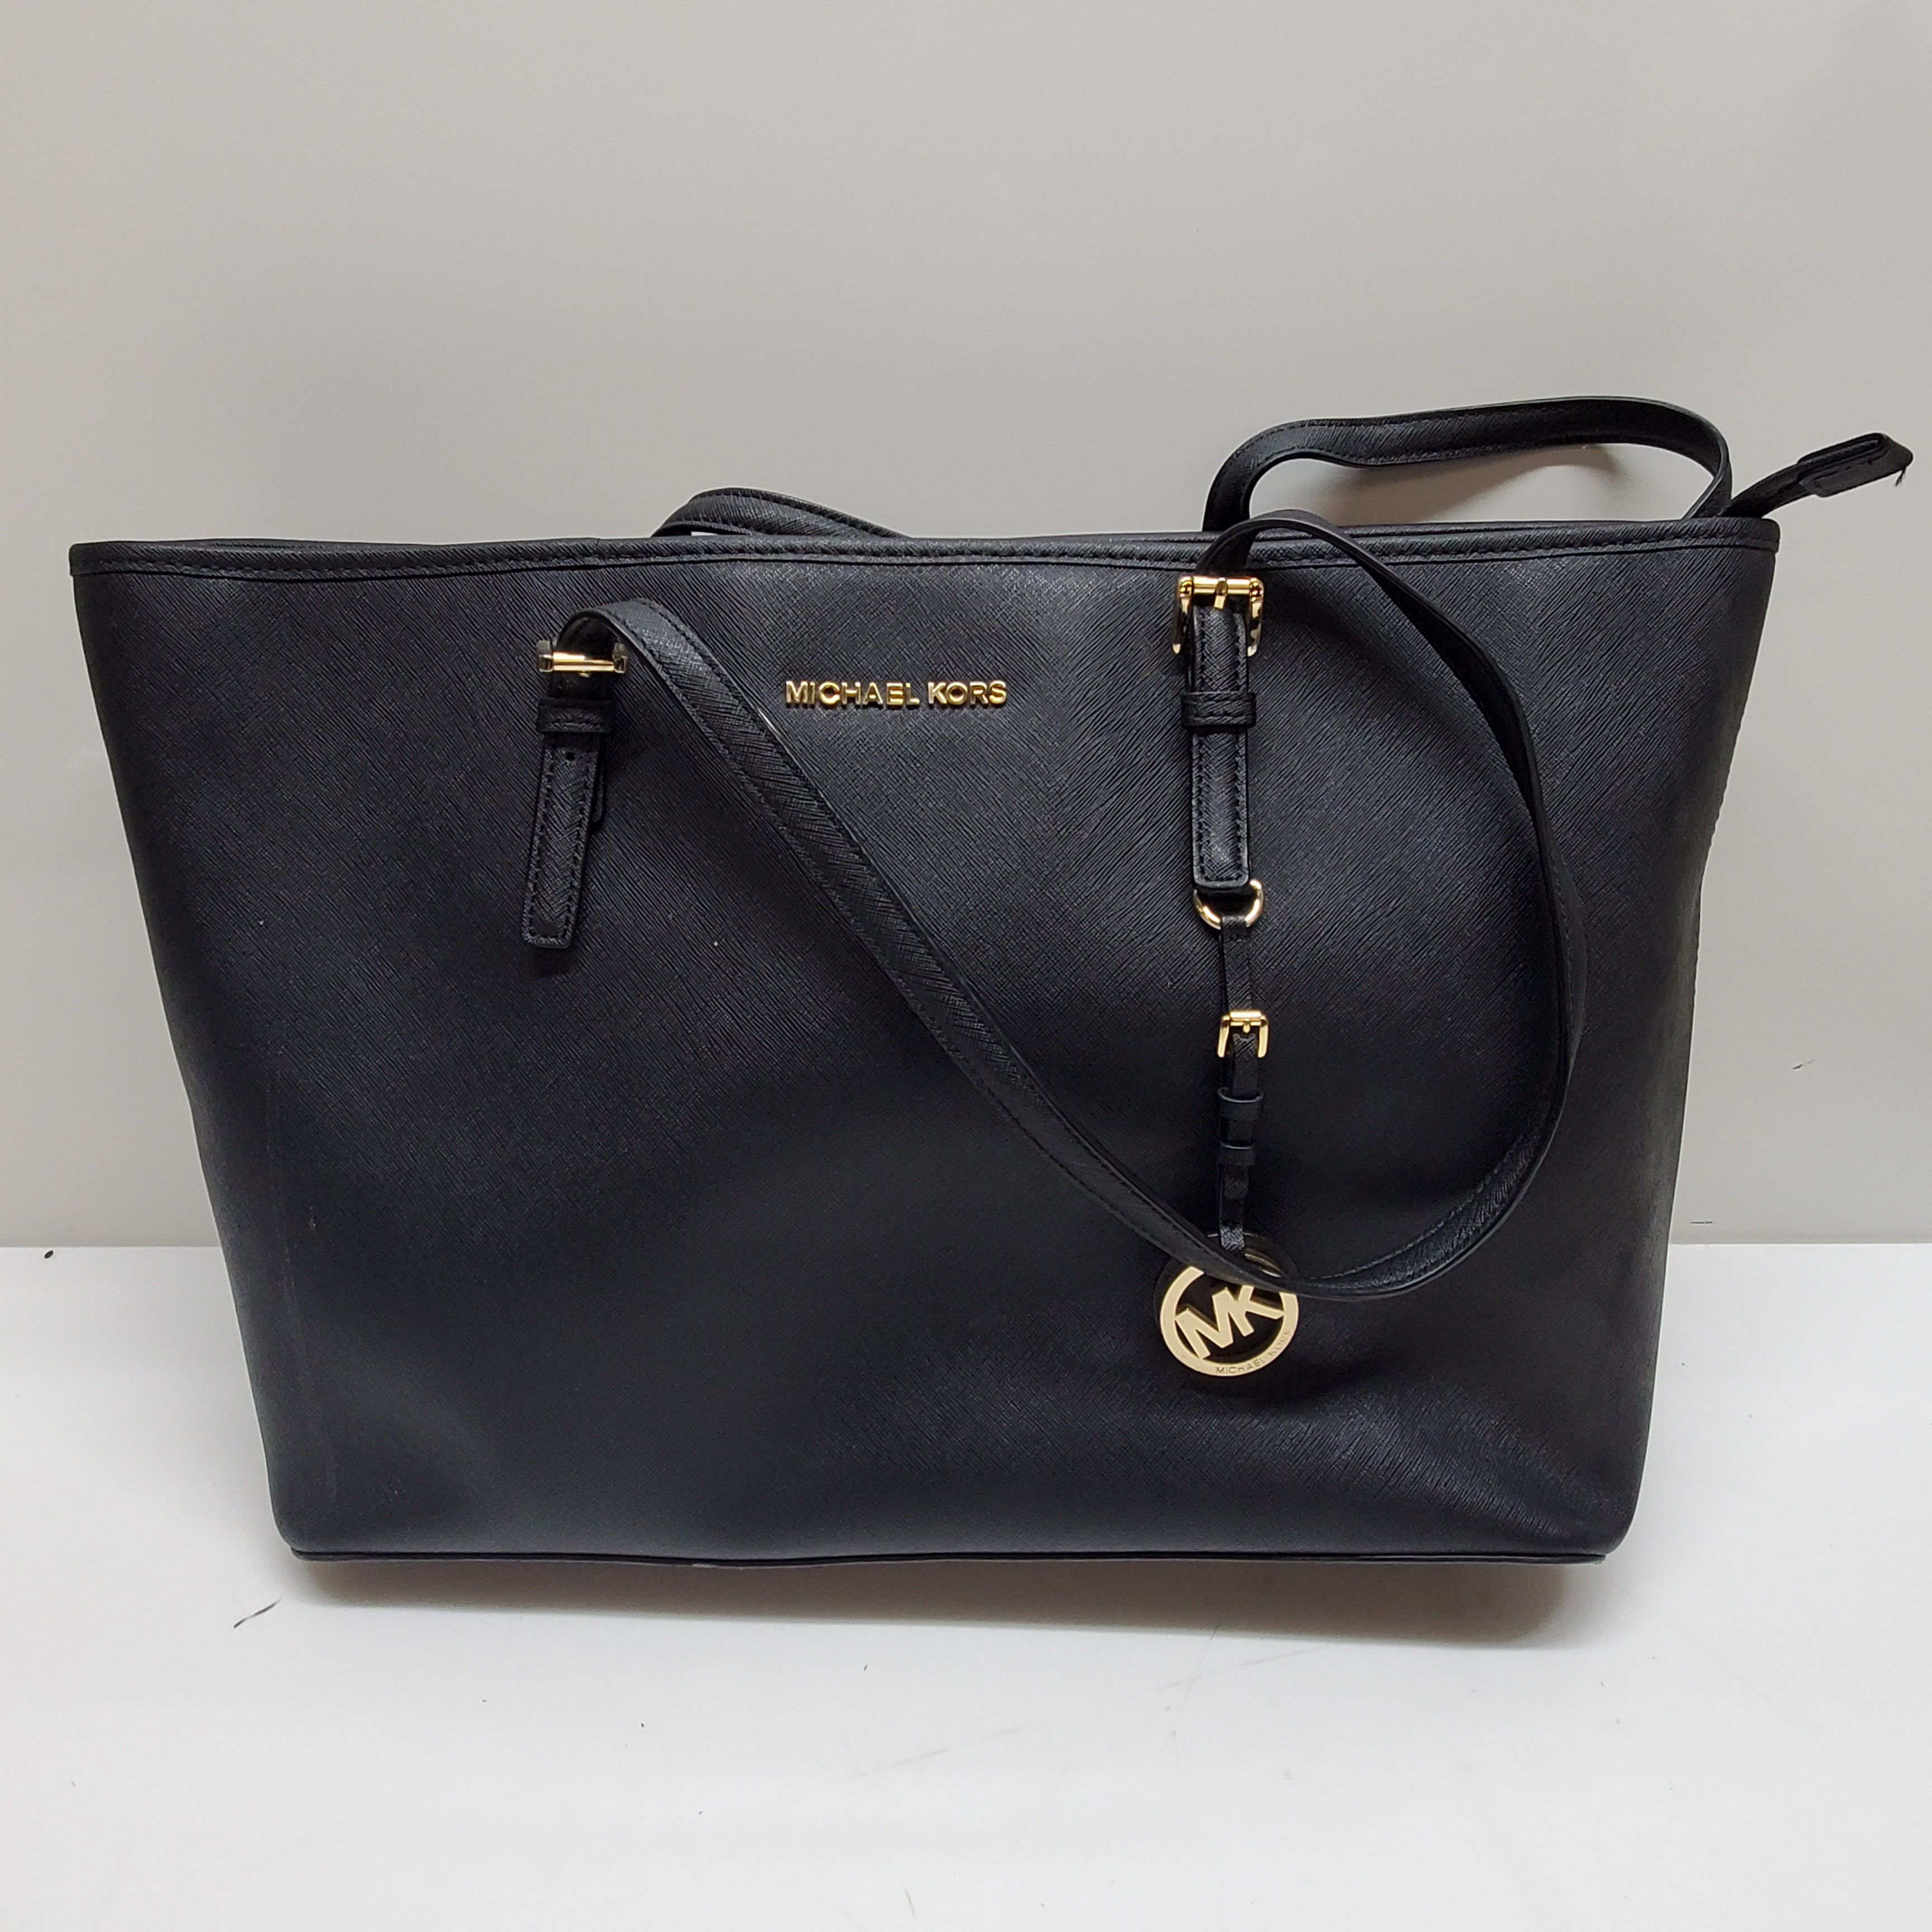 Women's Handbag Michael Kors 35F2G0ET60-ROSE Pink 30 x 28 x 10 cm - buy,  price, reviews in Estonia | sellme.ee